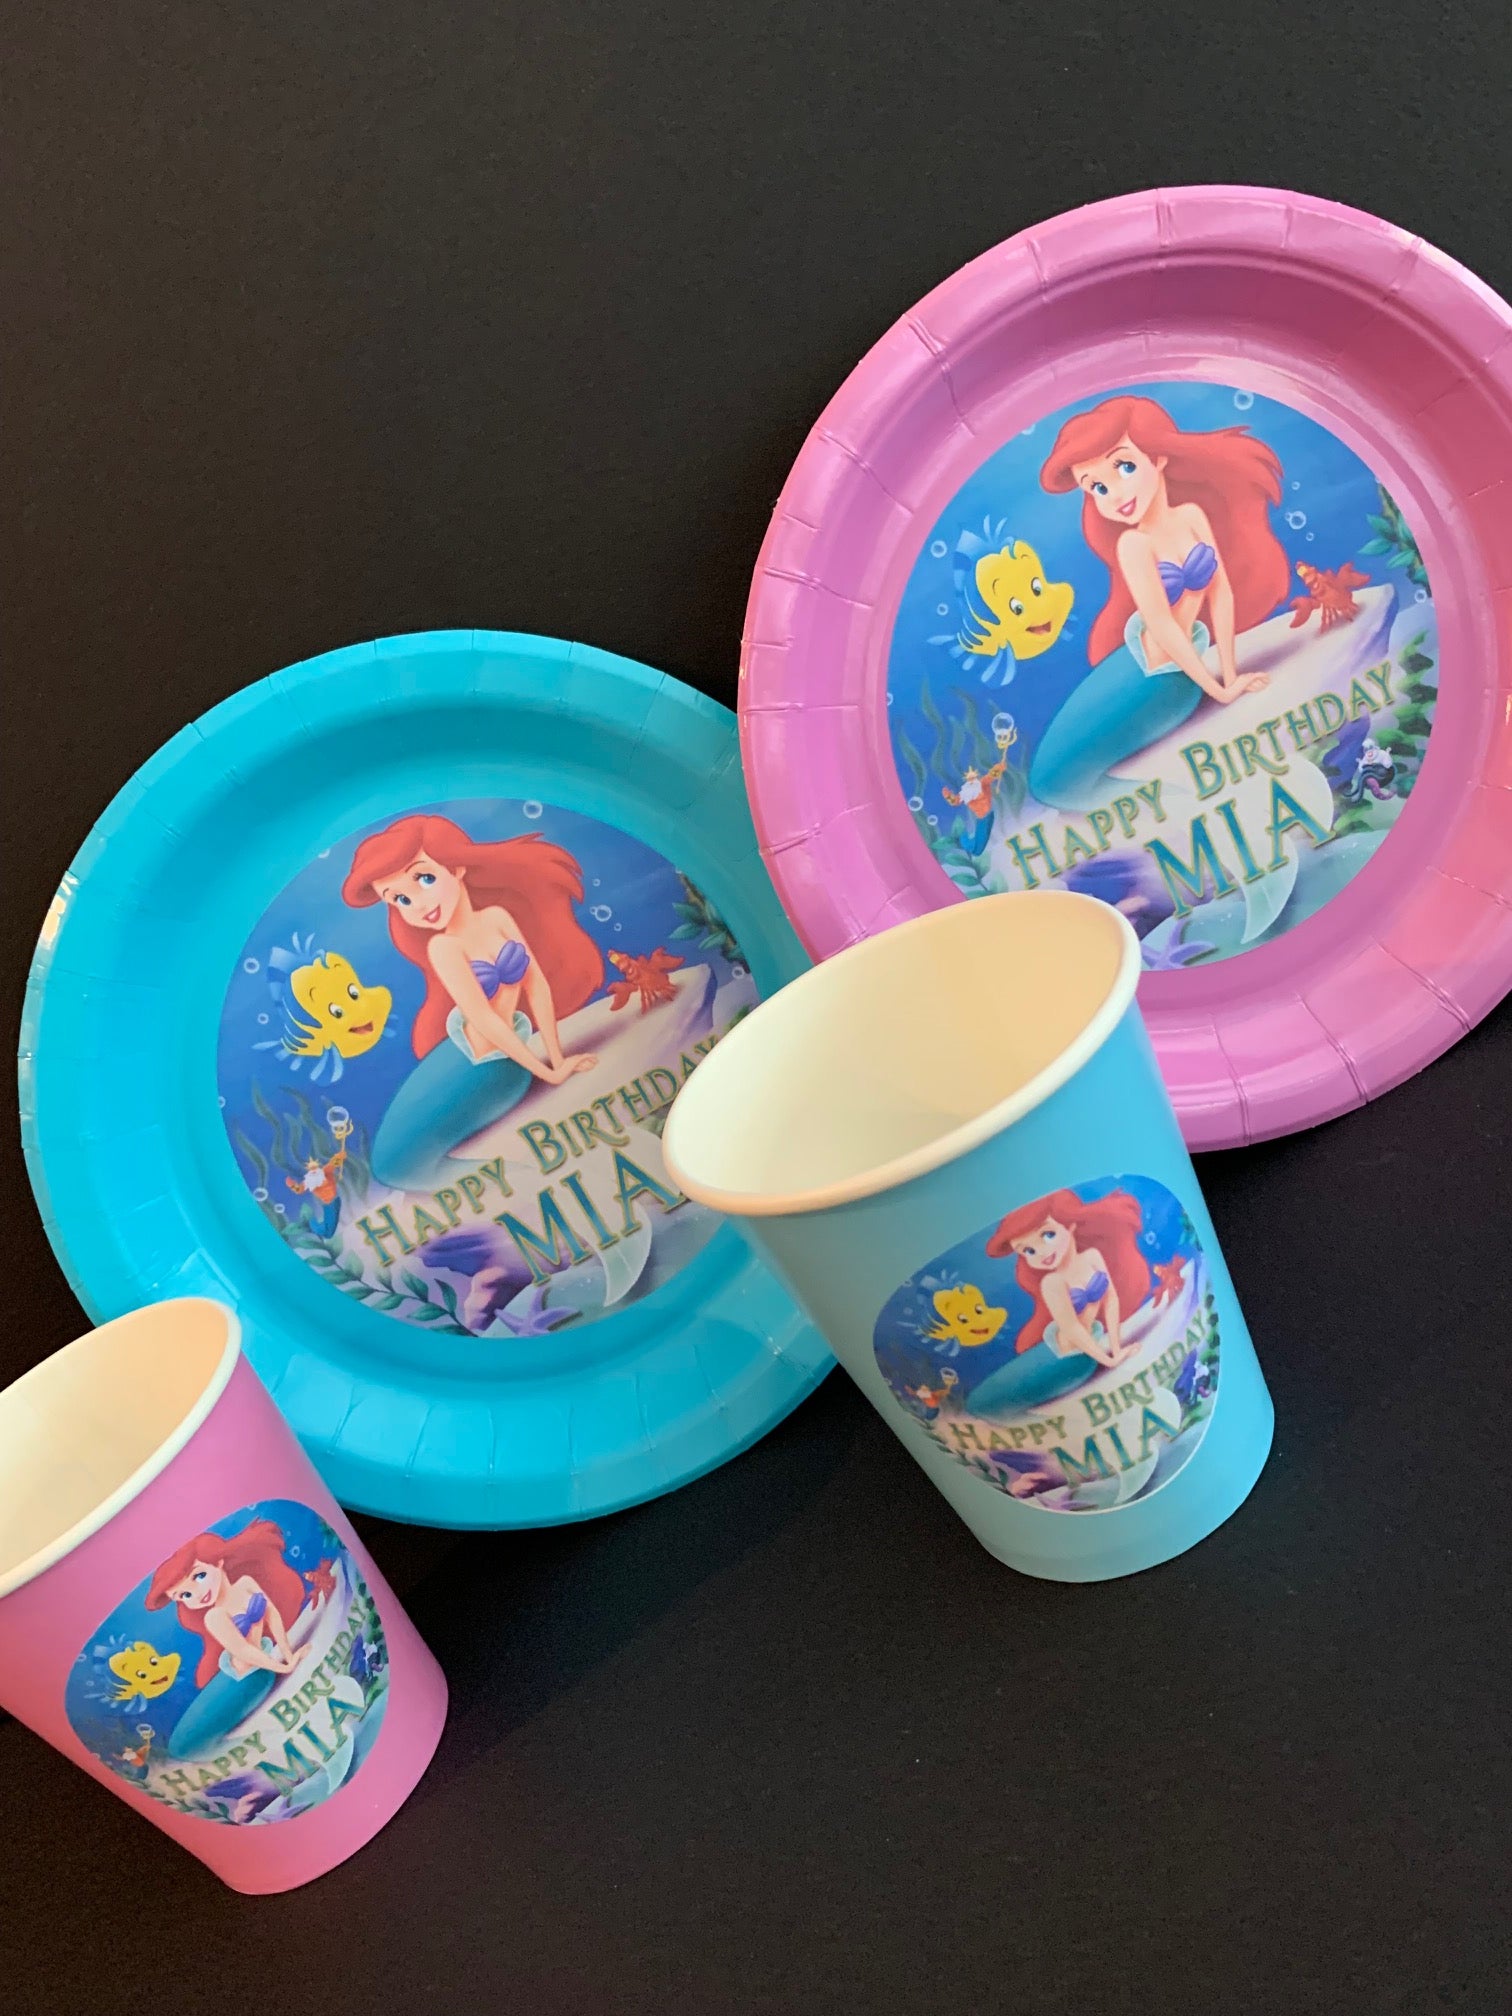 The little mermaid party tableware